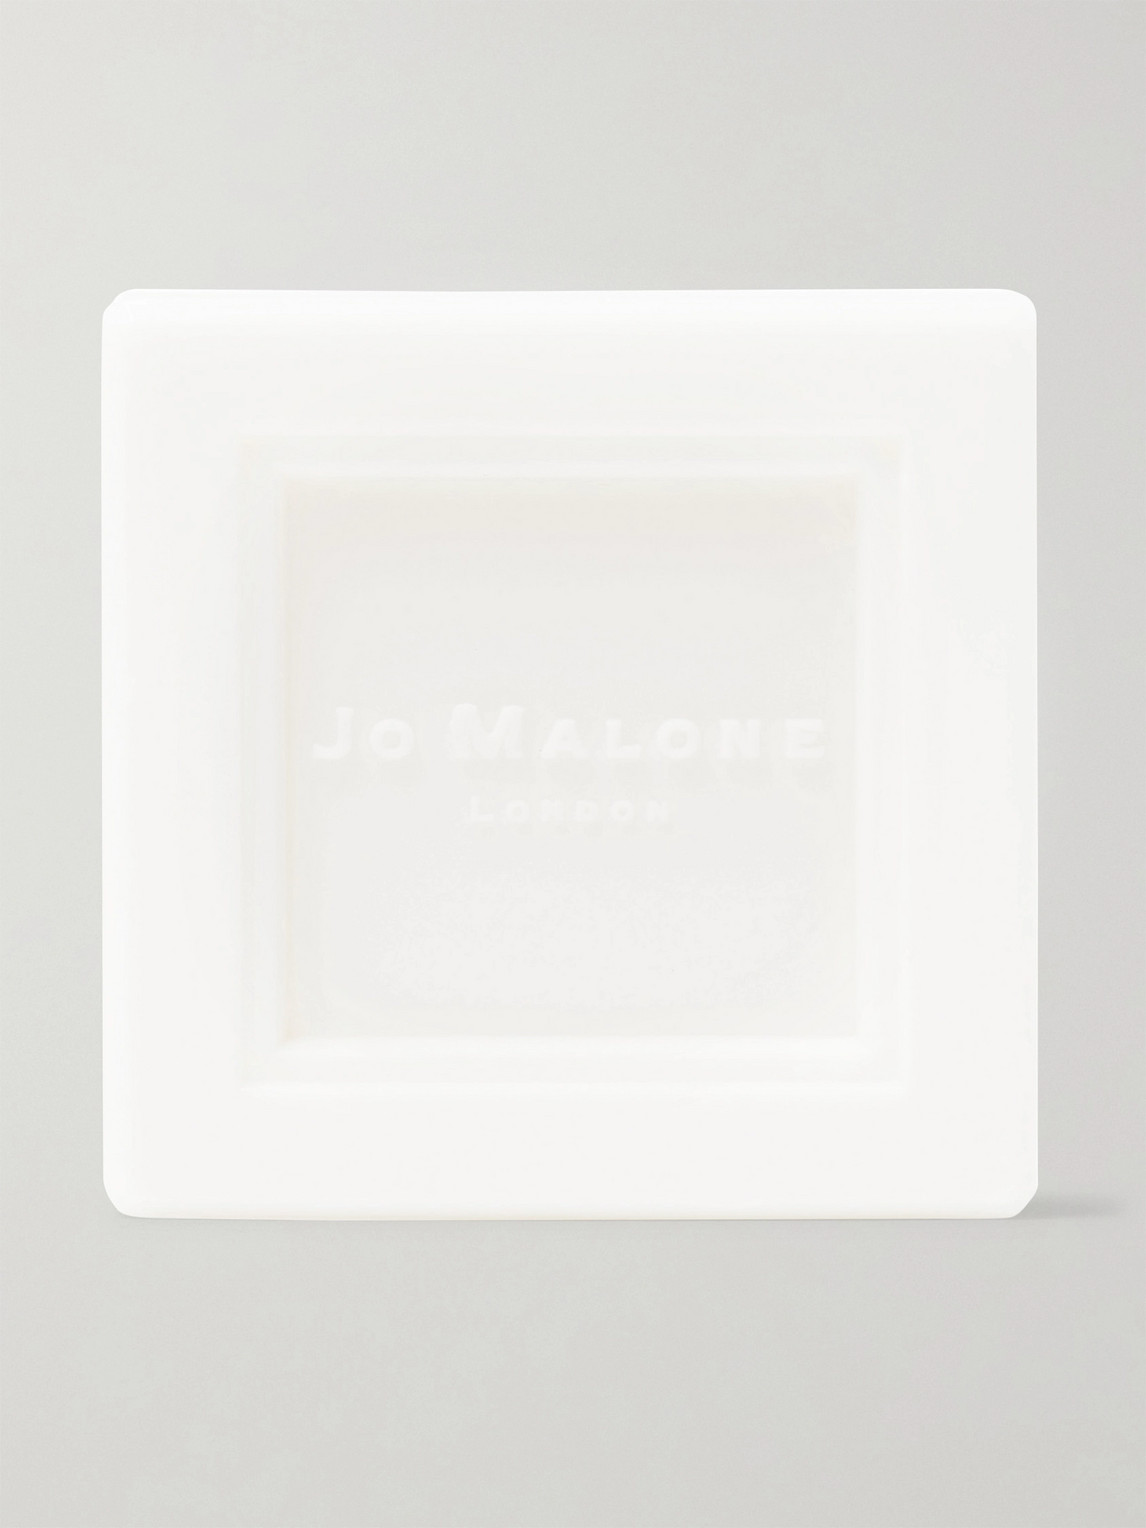 JO MALONE LONDON BLACKBERRY & BAY SOAP, 100G